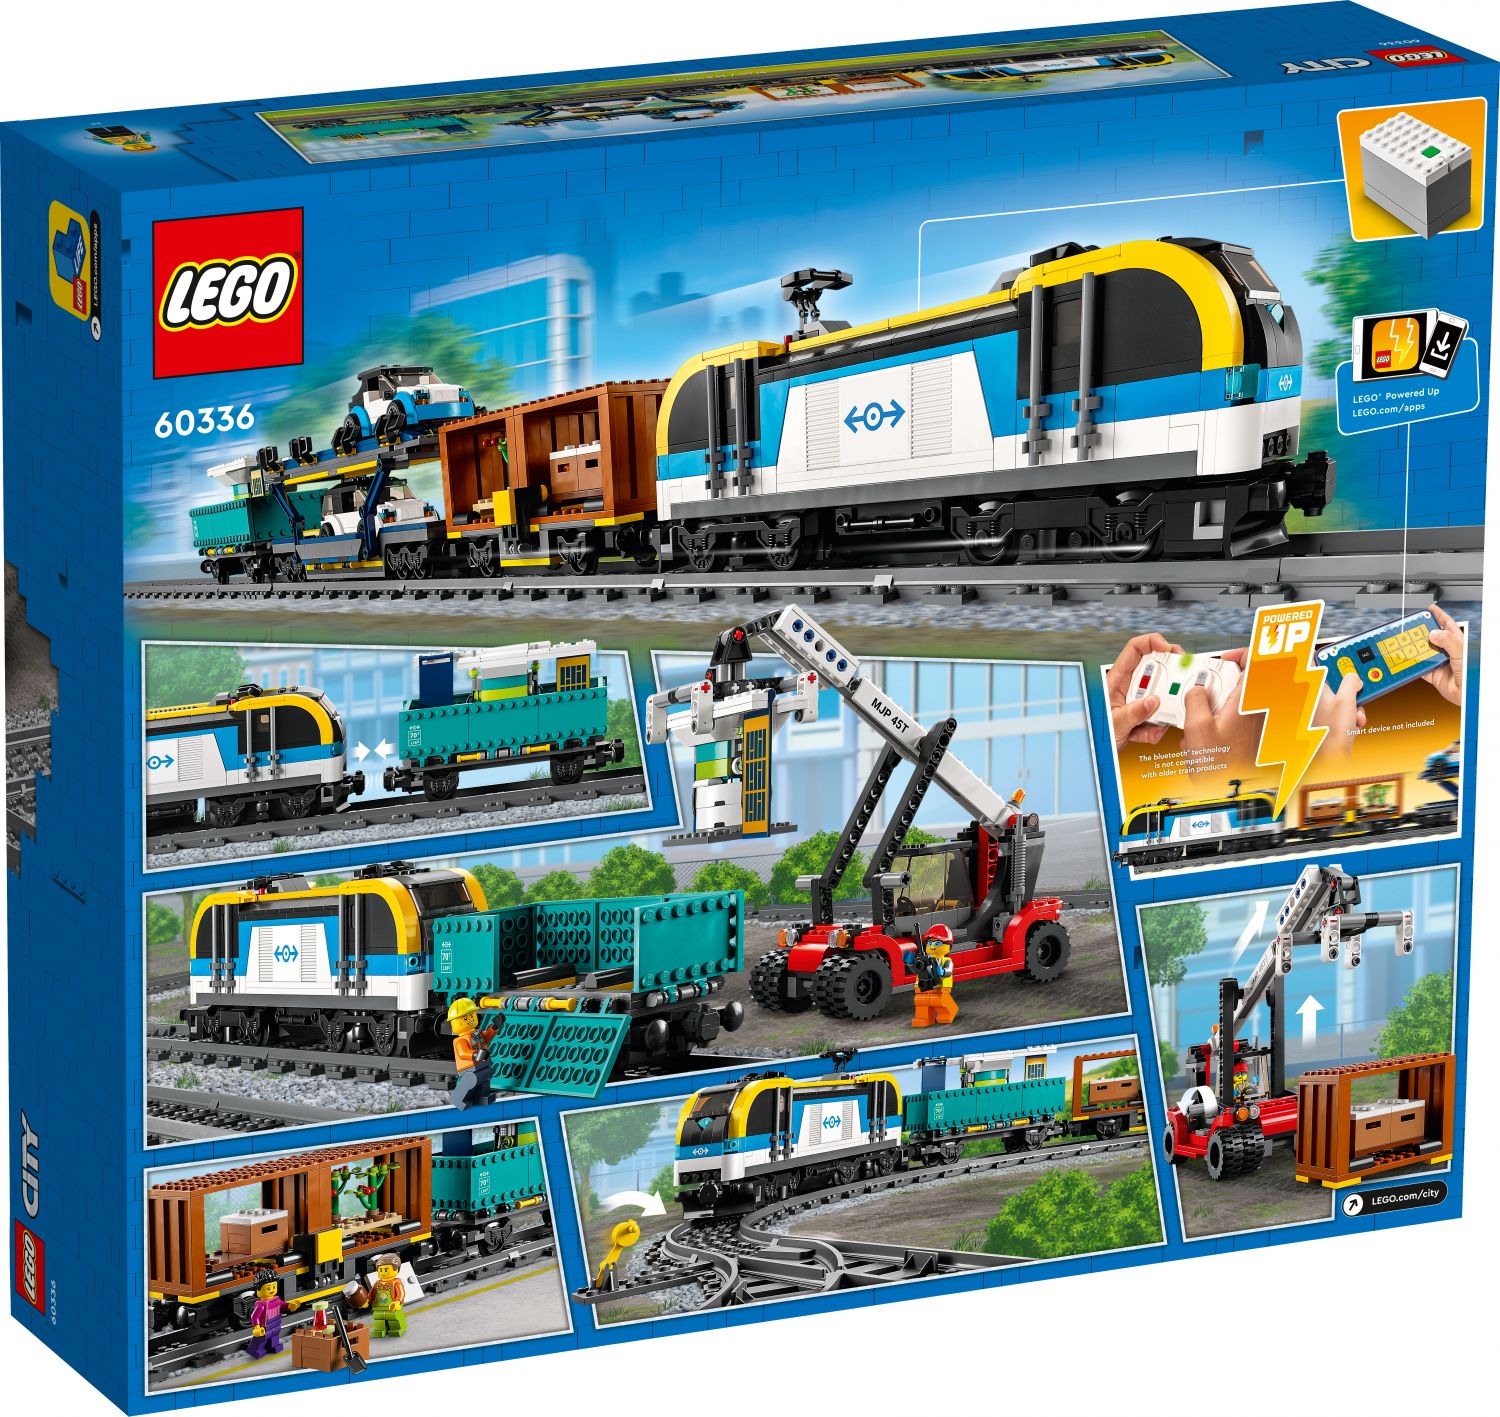 sgbrickswell LEGO City 60336 Freight 